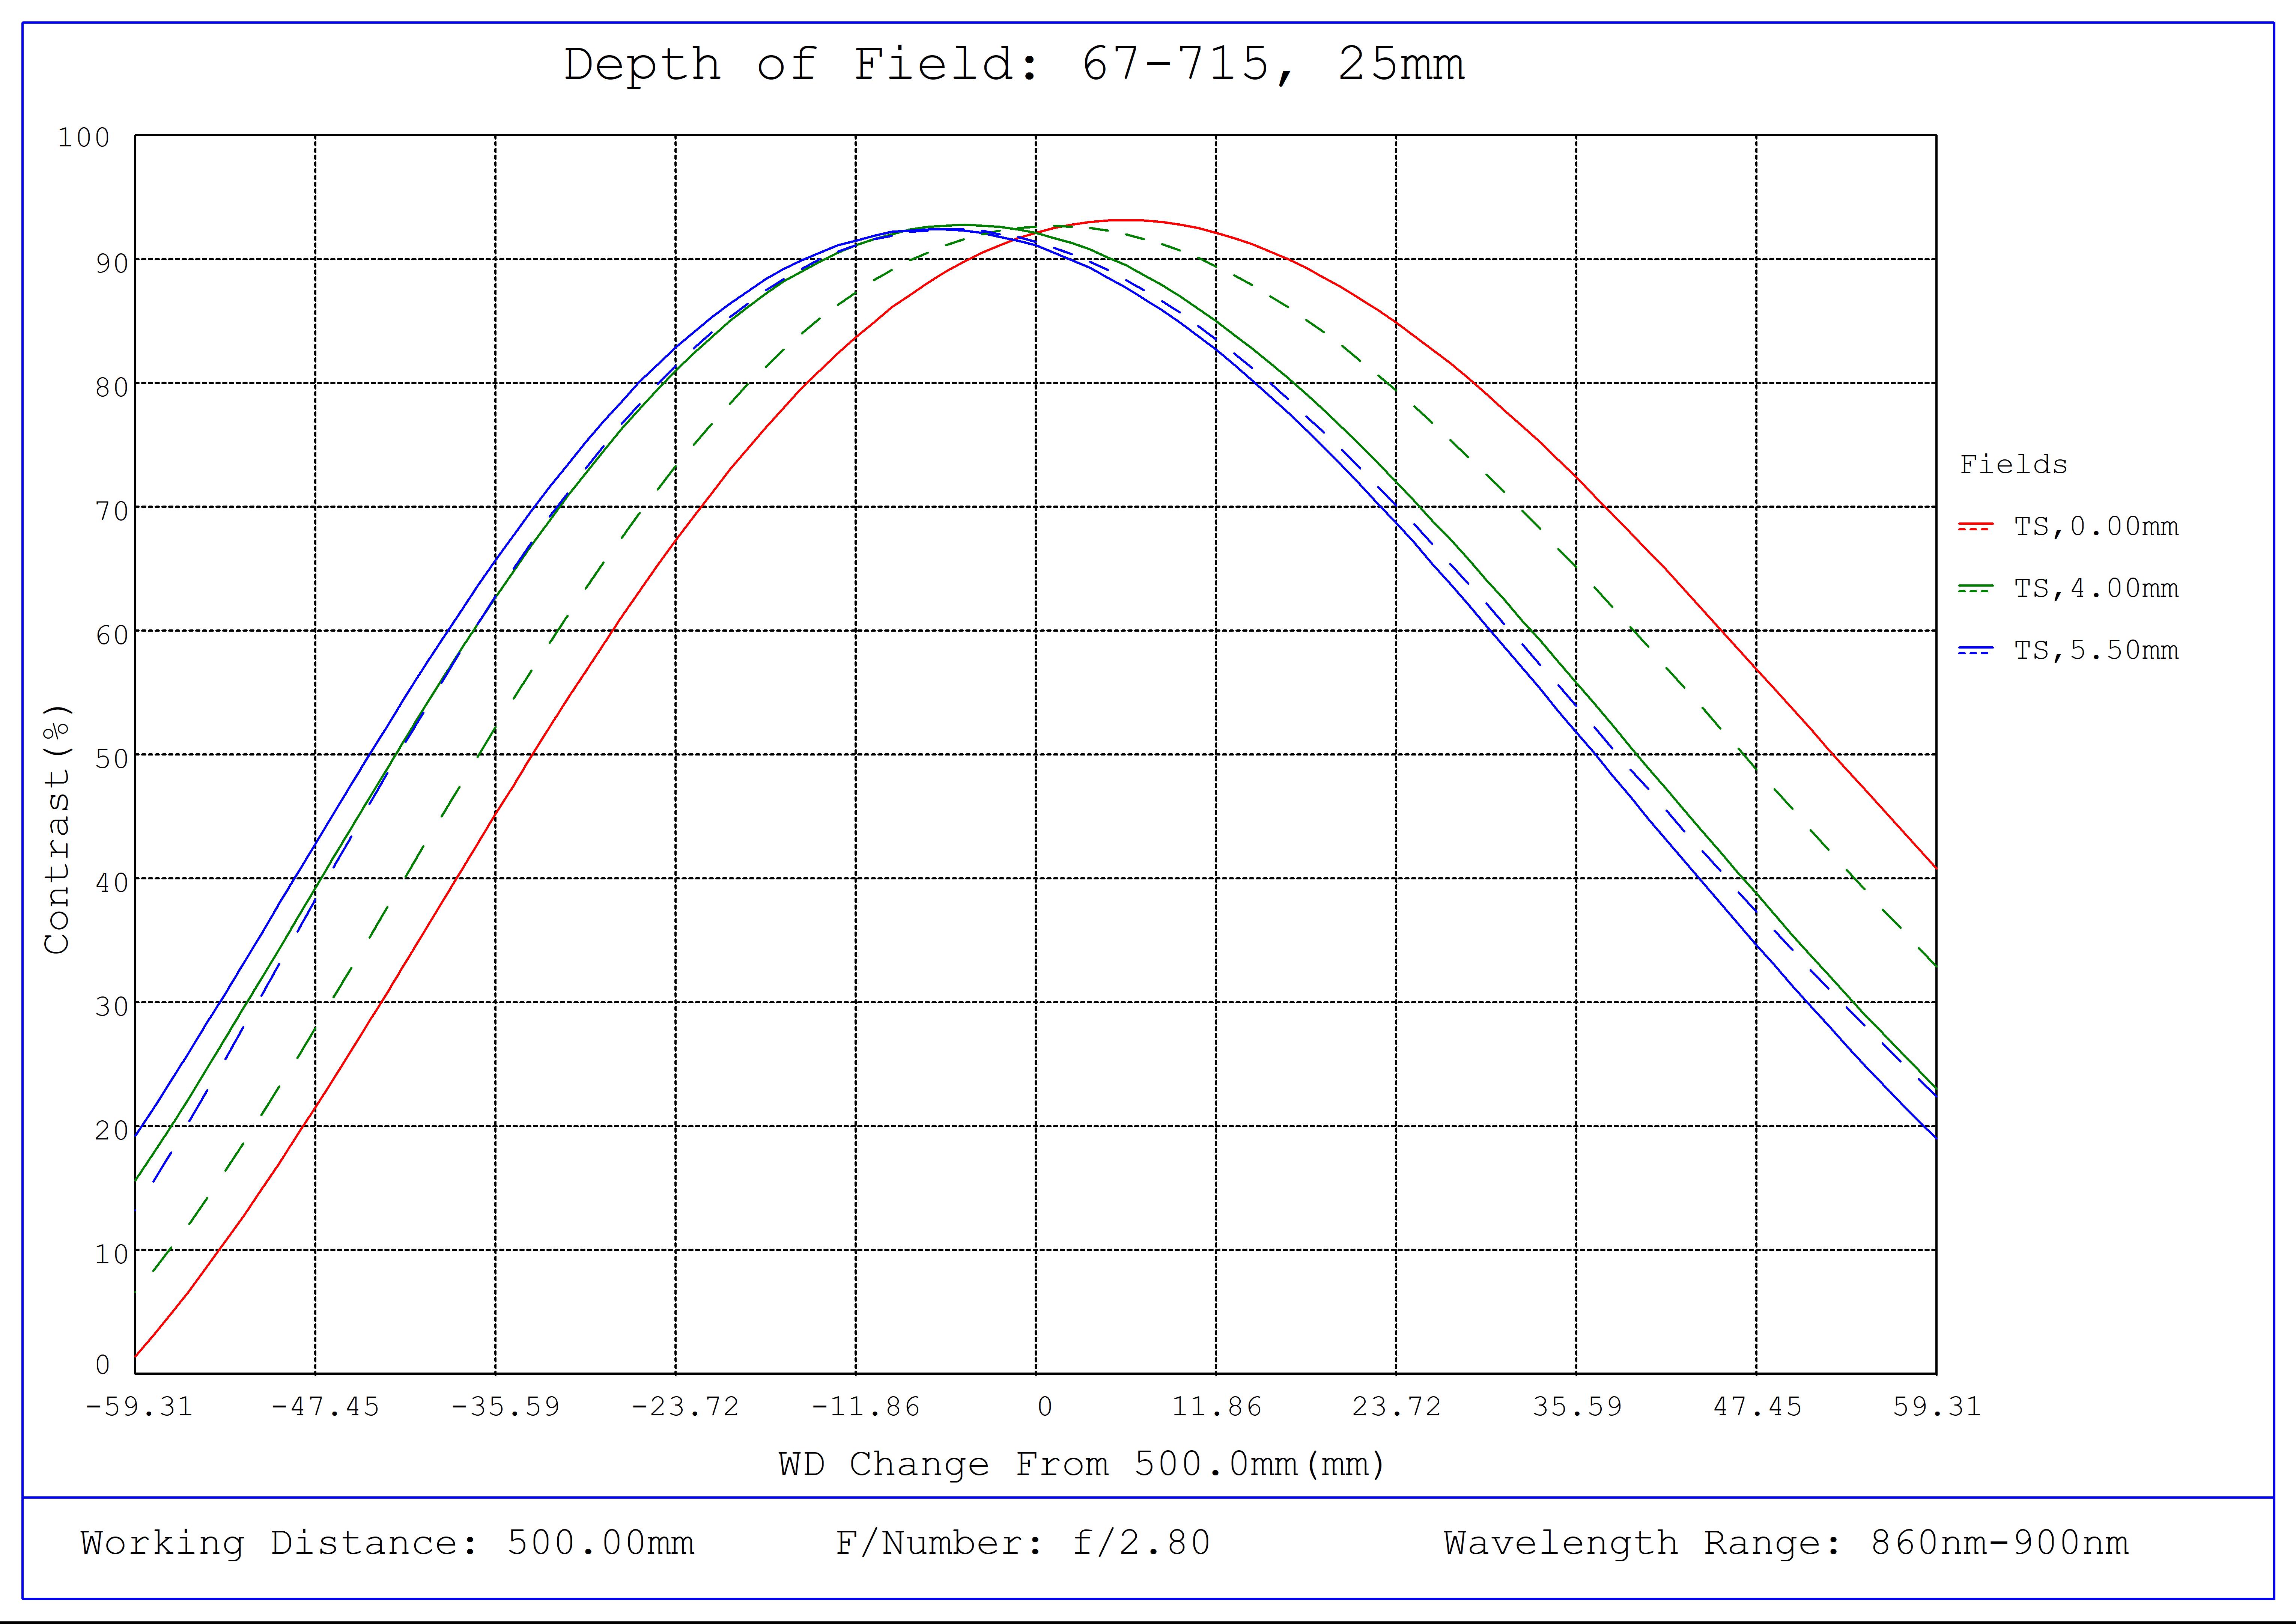 #67-715, 25mm C VIS-NIR Series Fixed Focal Length Lens, Depth of Field Plot (NIR), 500mm Working Distance, f2.8